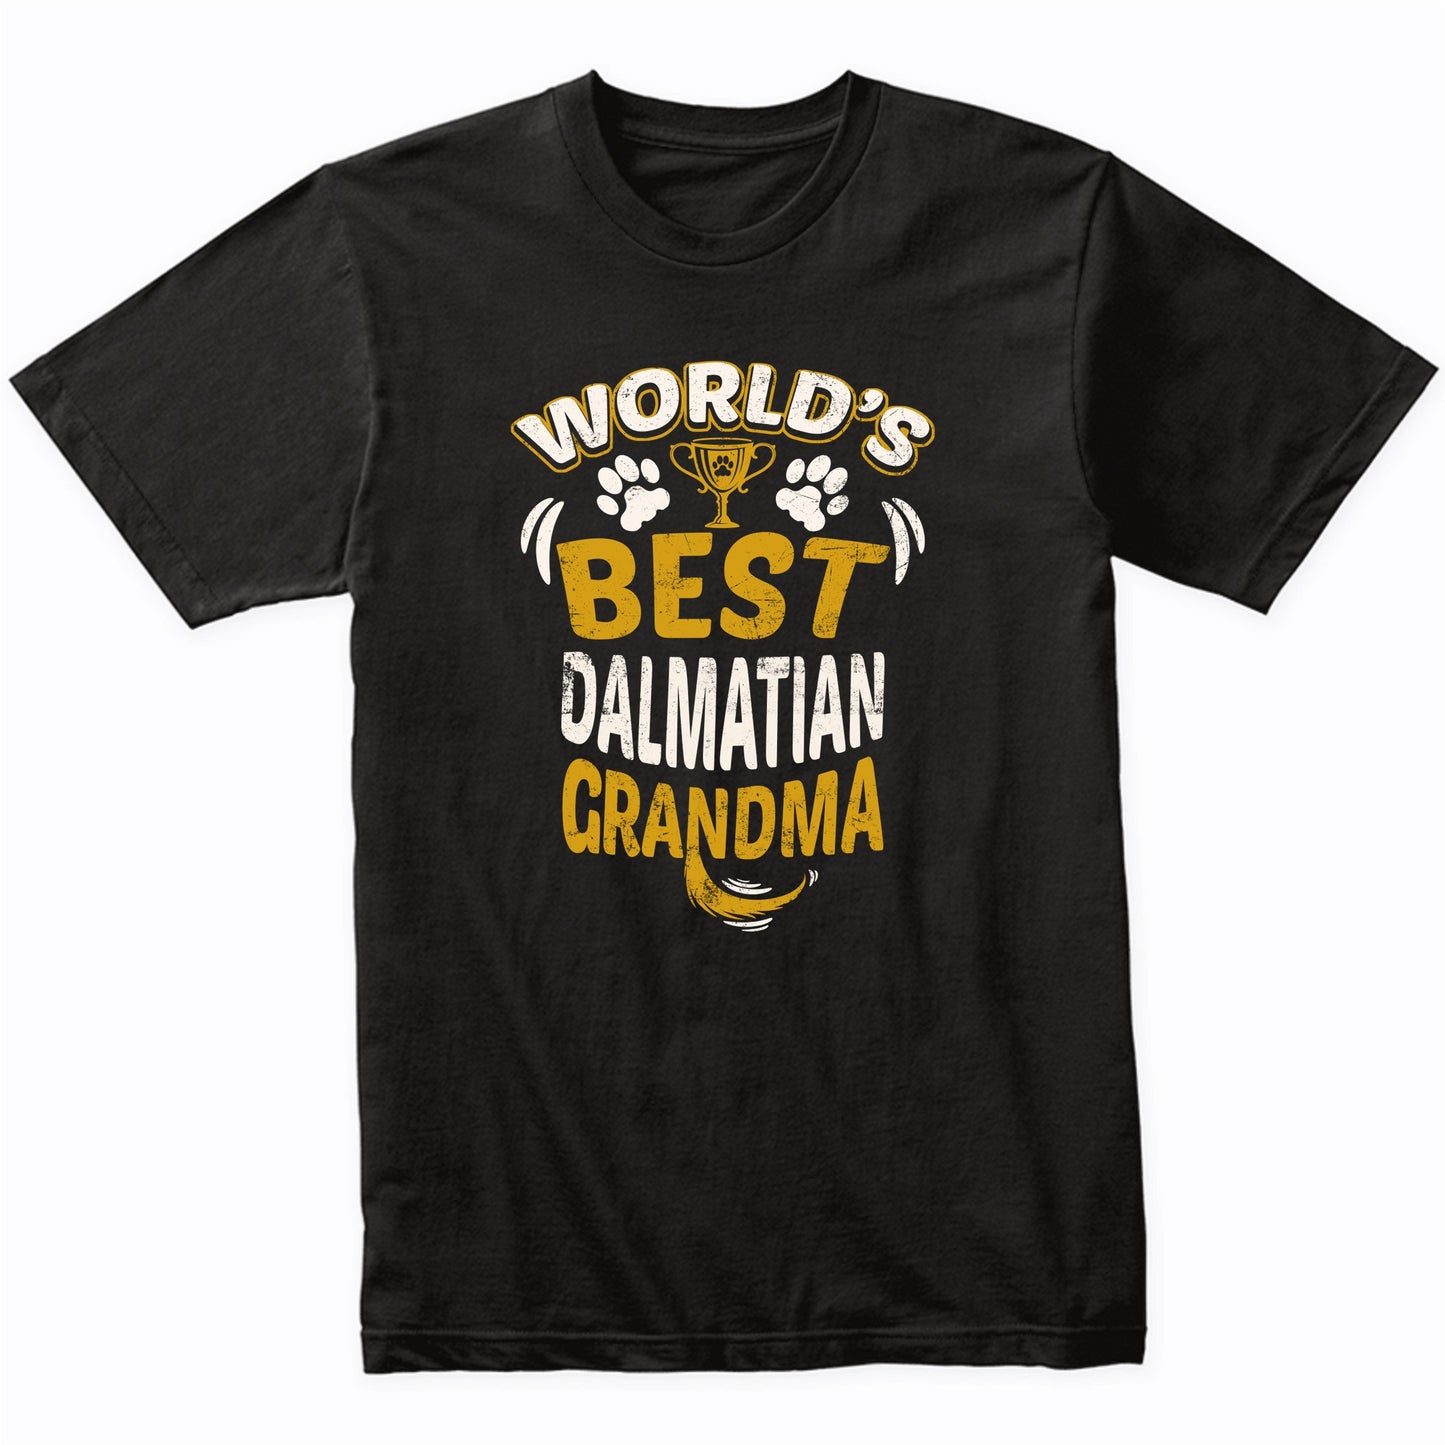 World's Best Dalmatian Grandma Graphic T-Shirt